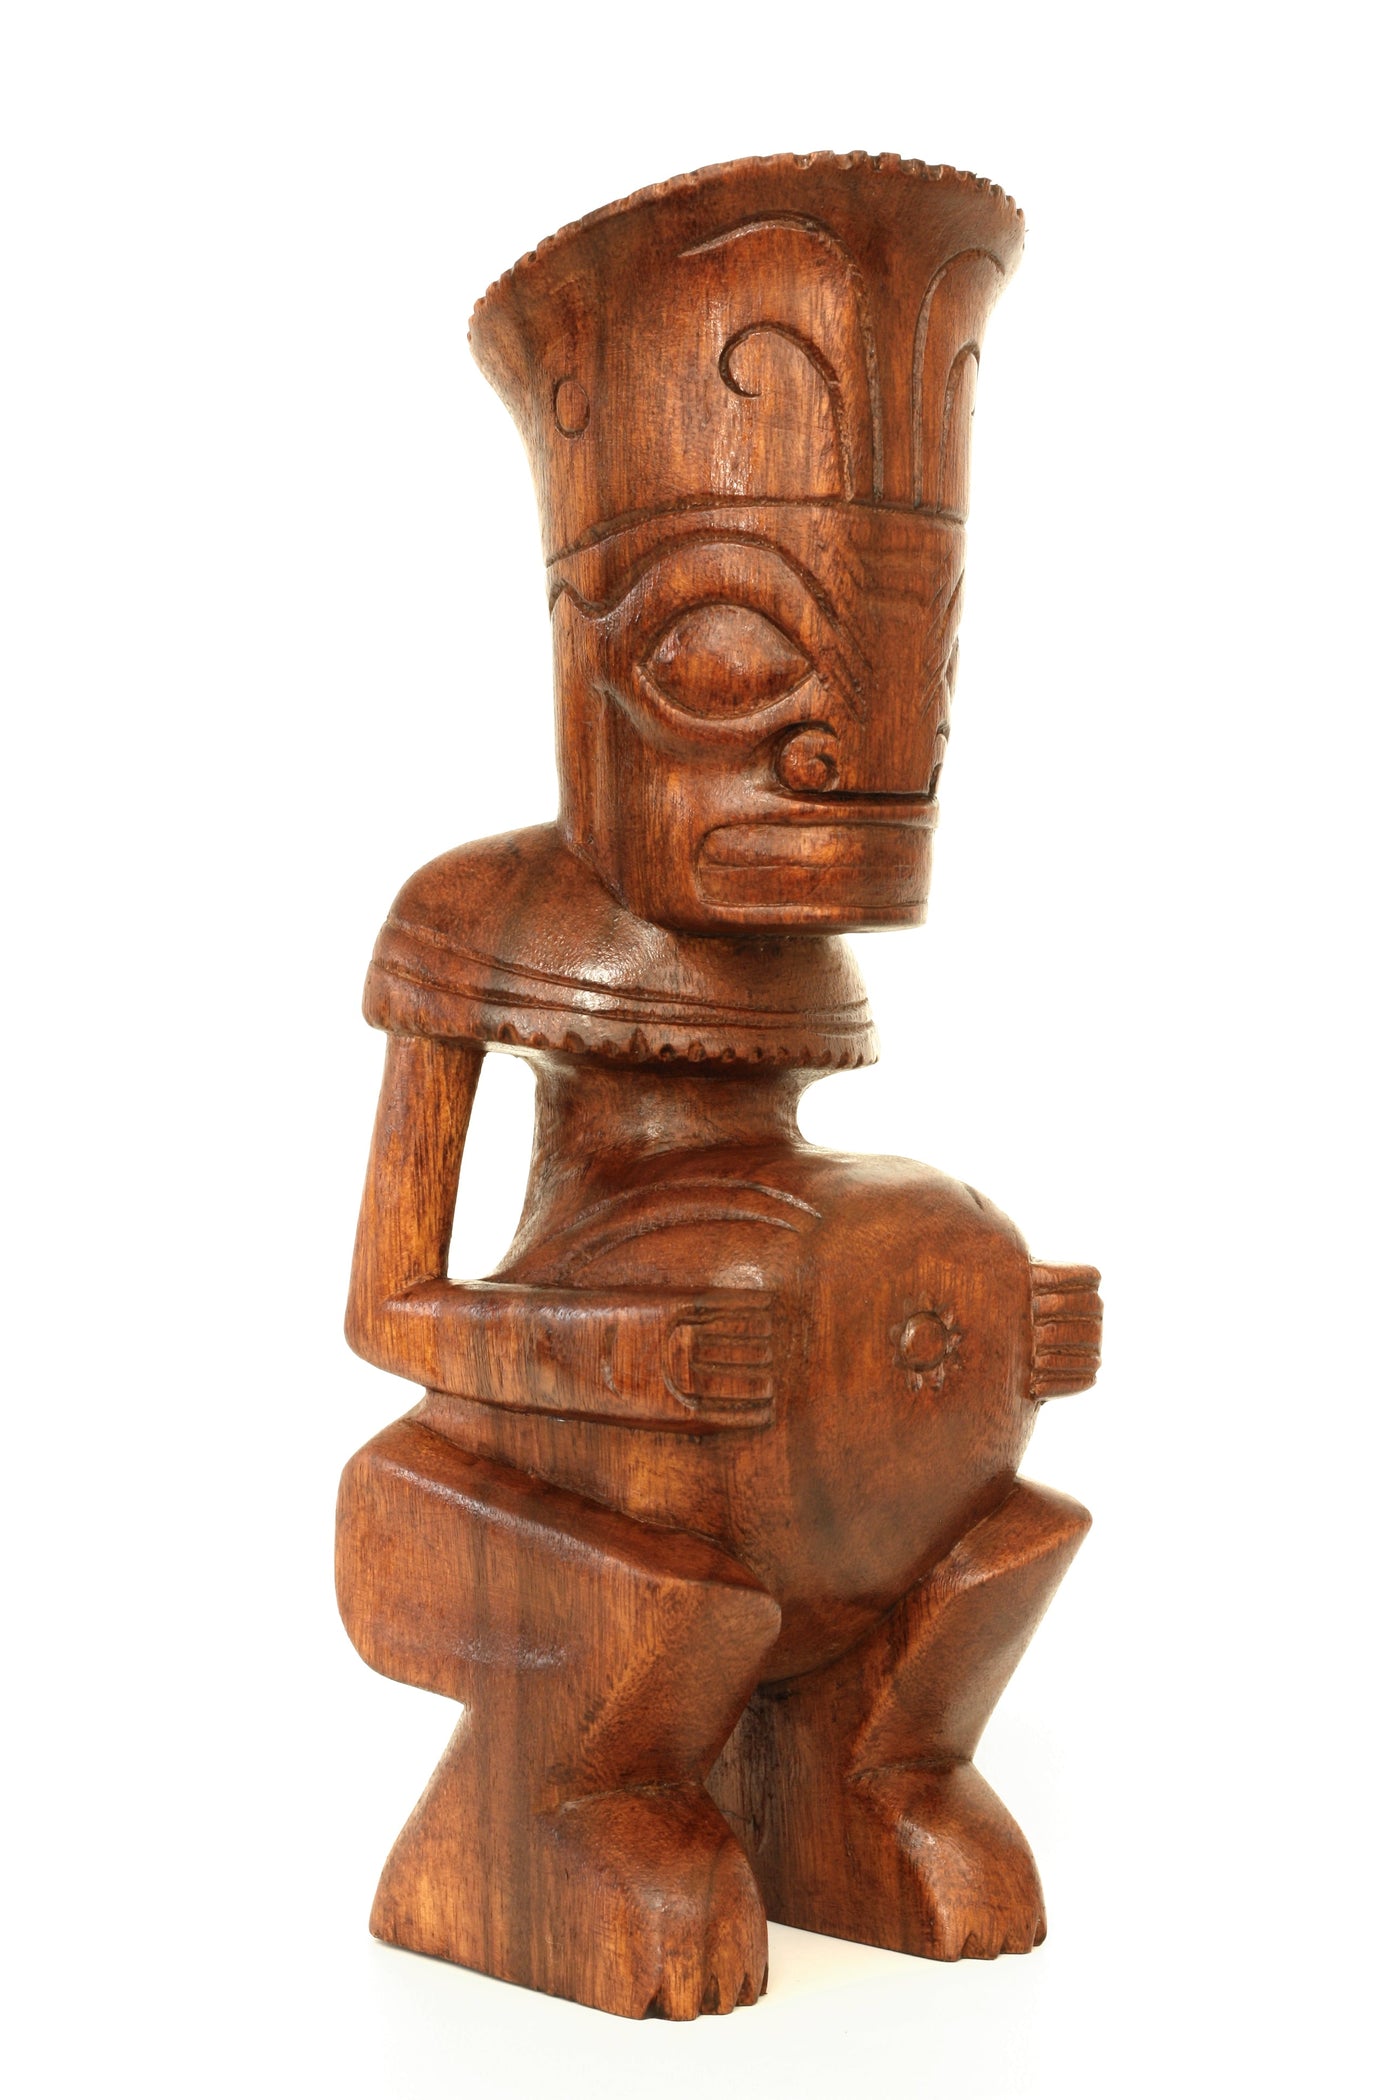 Handmade Wooden Primitive Big Belly Tribal Statue Sculpture Tiki Bar Totem Handcrafted Unique Gift Art Home Decor Accent Figurine Artwork Hand Carved